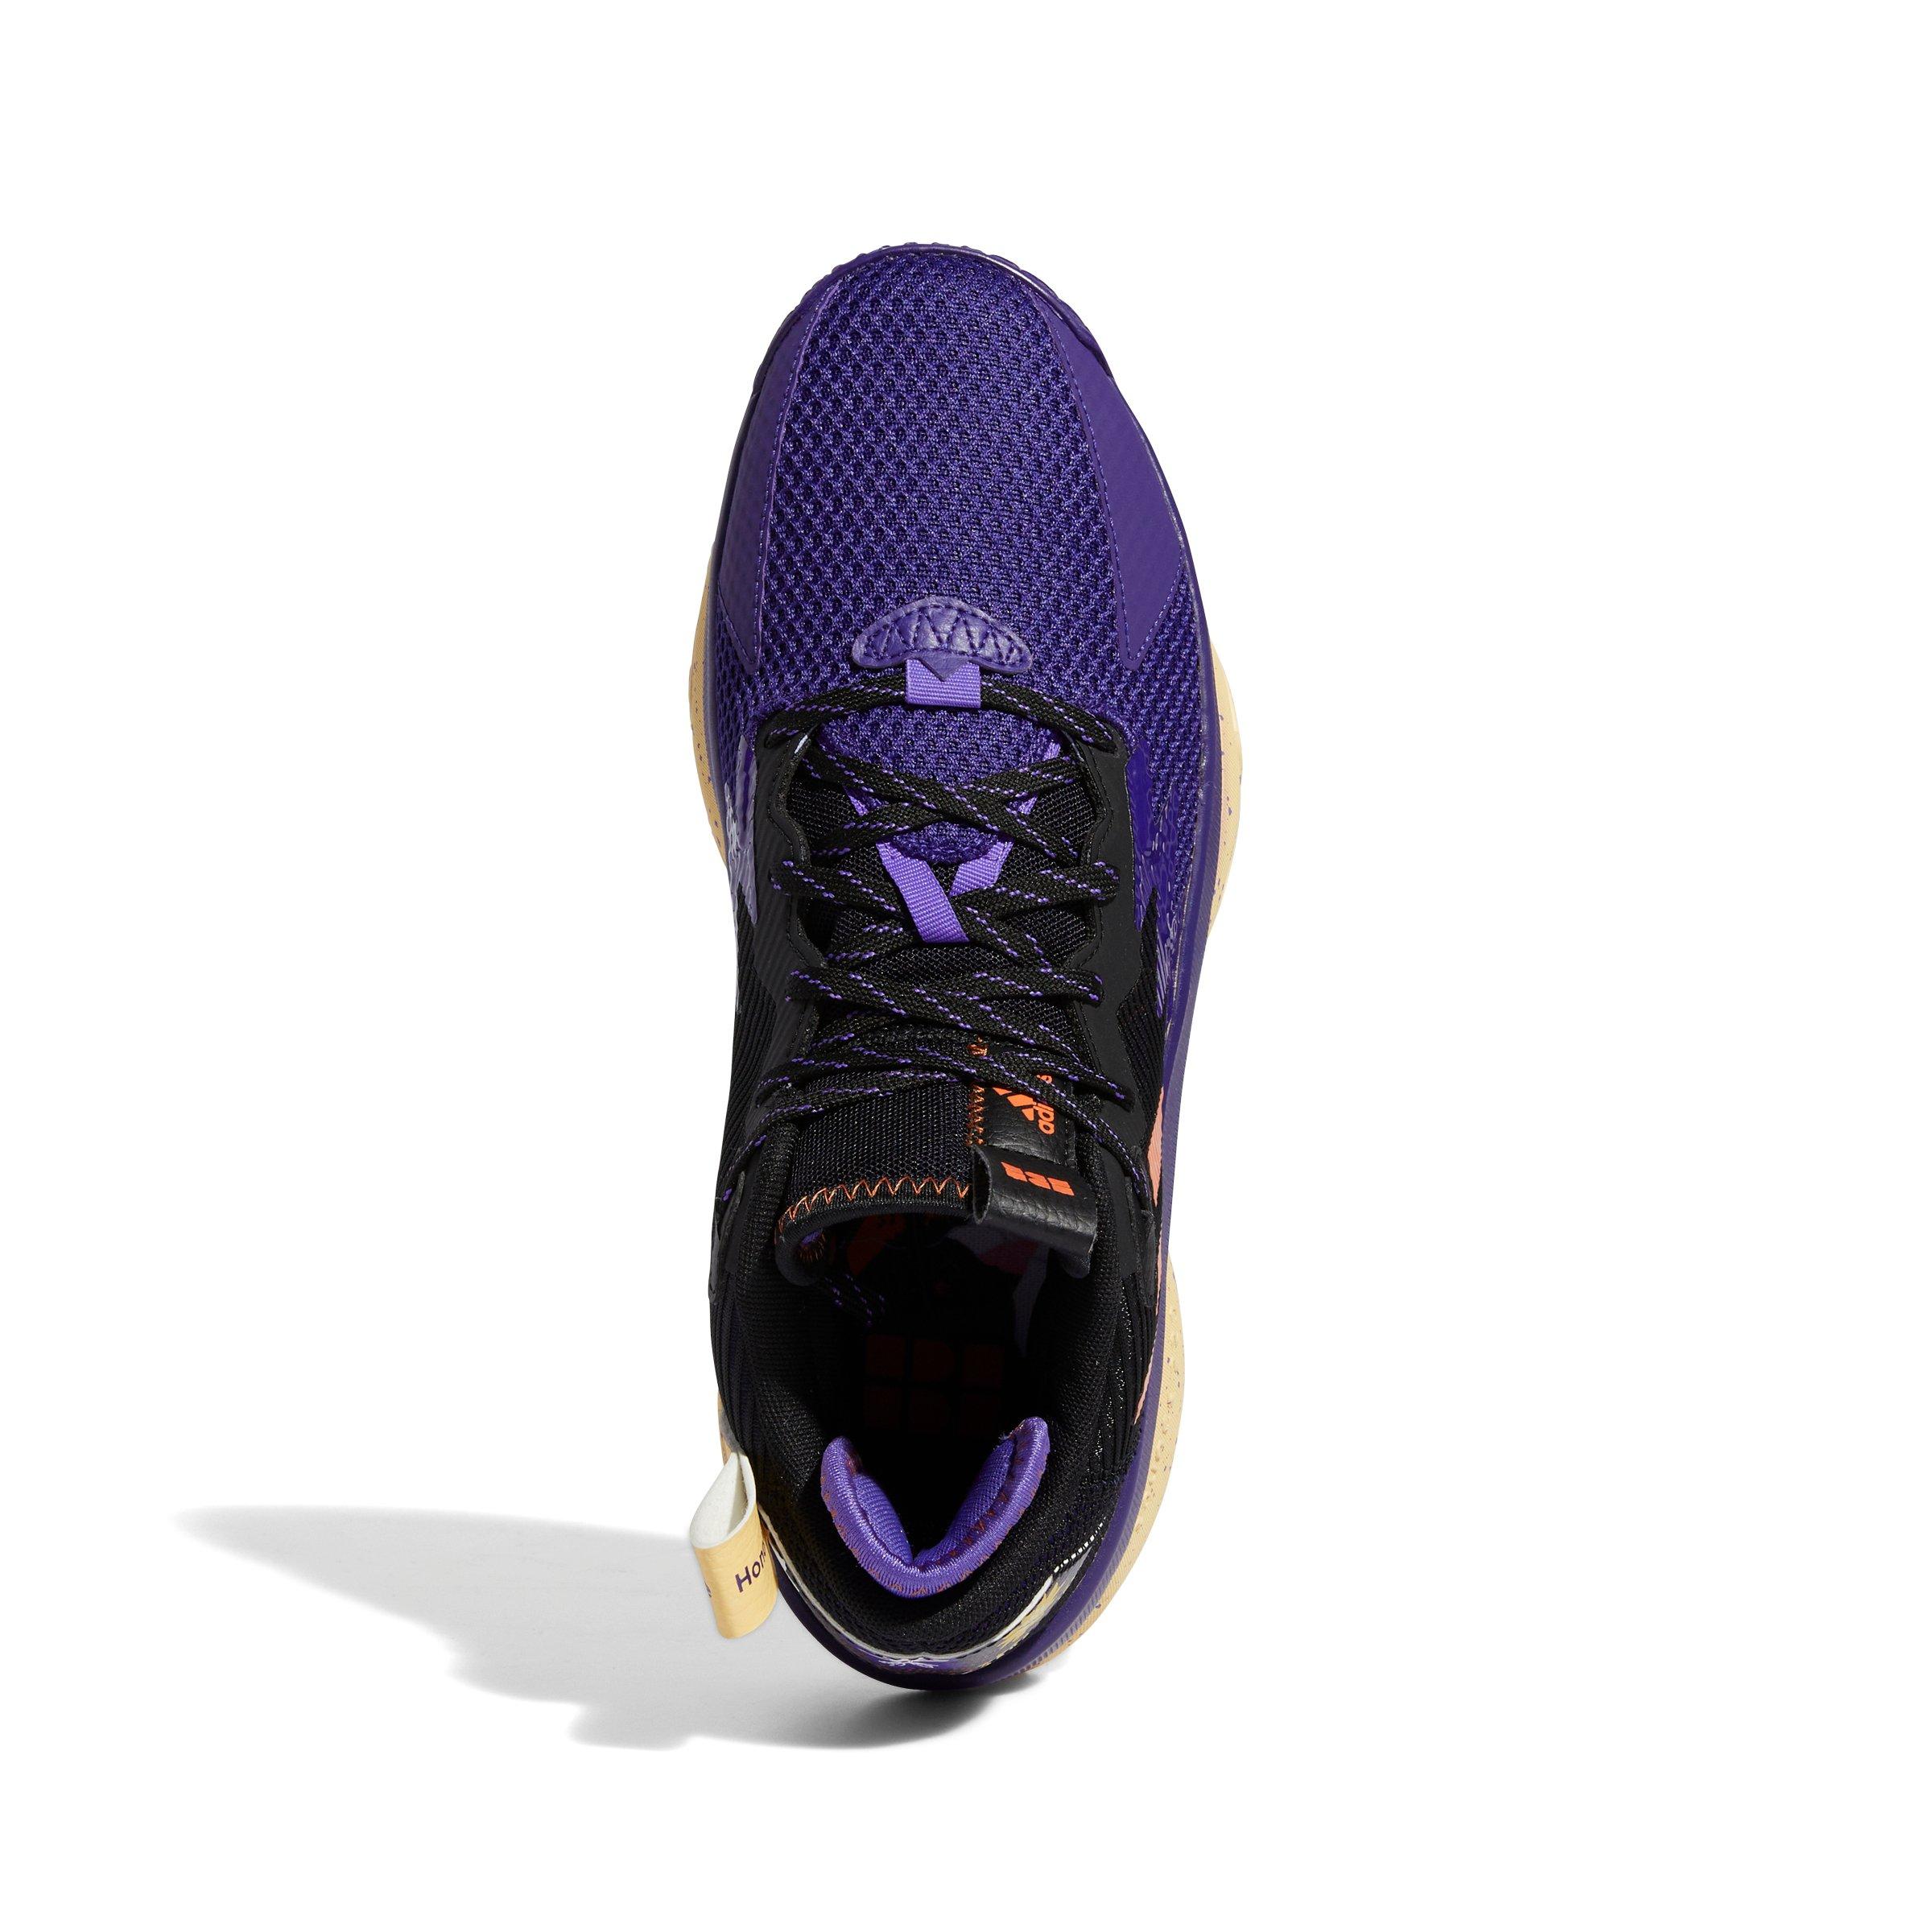 Adidas Dame 8 PE Louisville Cardinals Basketball Shoes GZ9708 Men Size 9  NEW